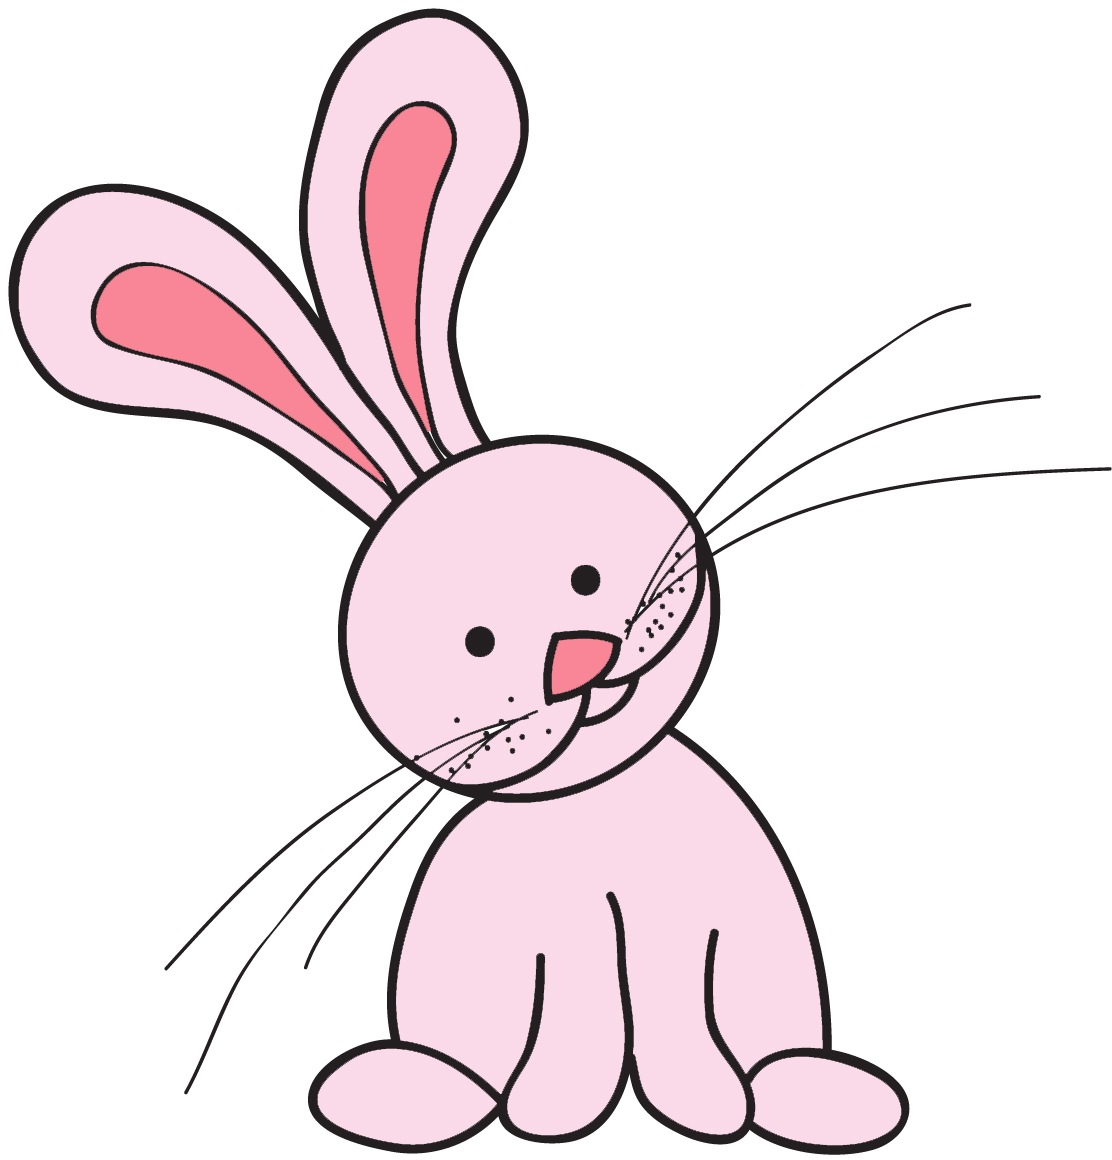 Bunny Cartoon Images - Cliparts.co